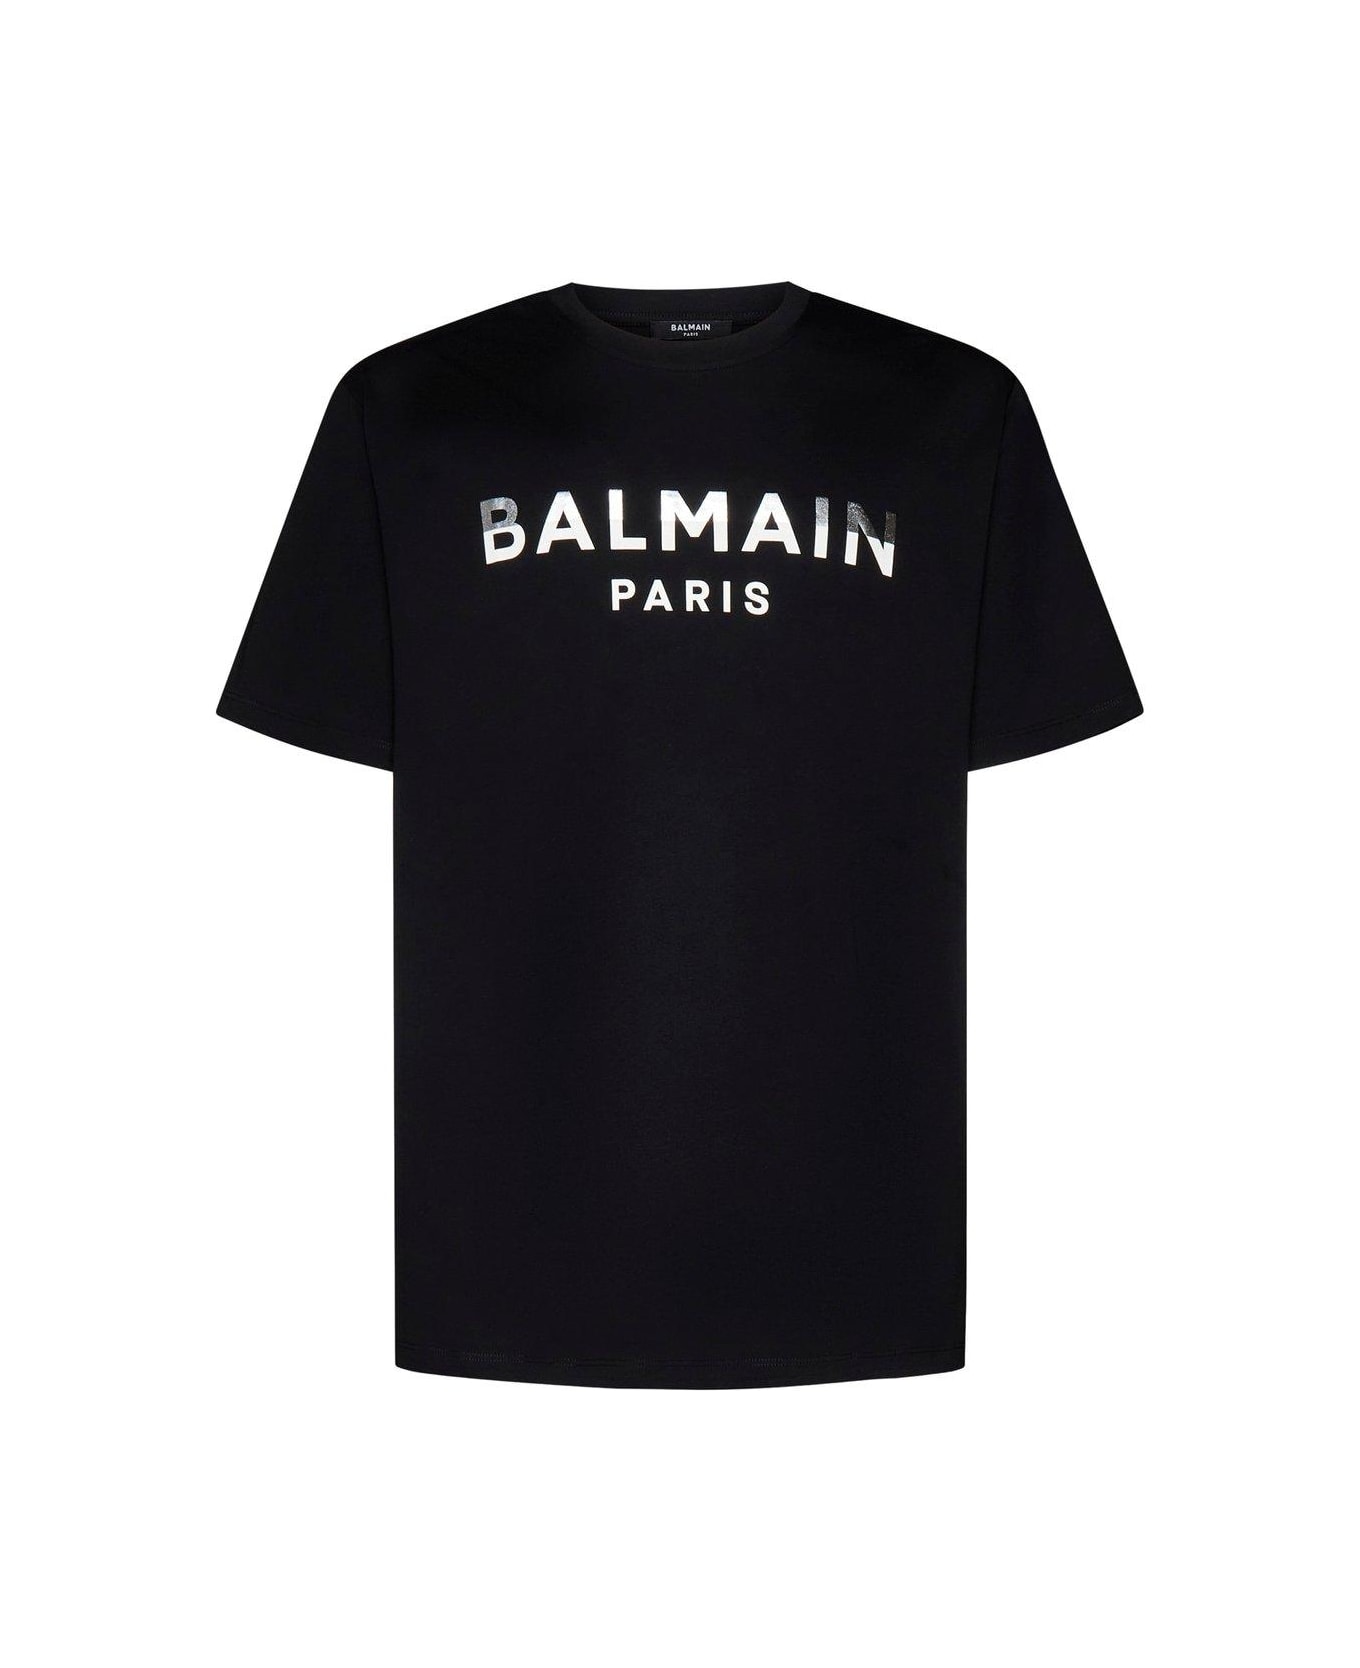 Balmain Logo Printed Crewneck T-shirt - Noir/argent シャツ